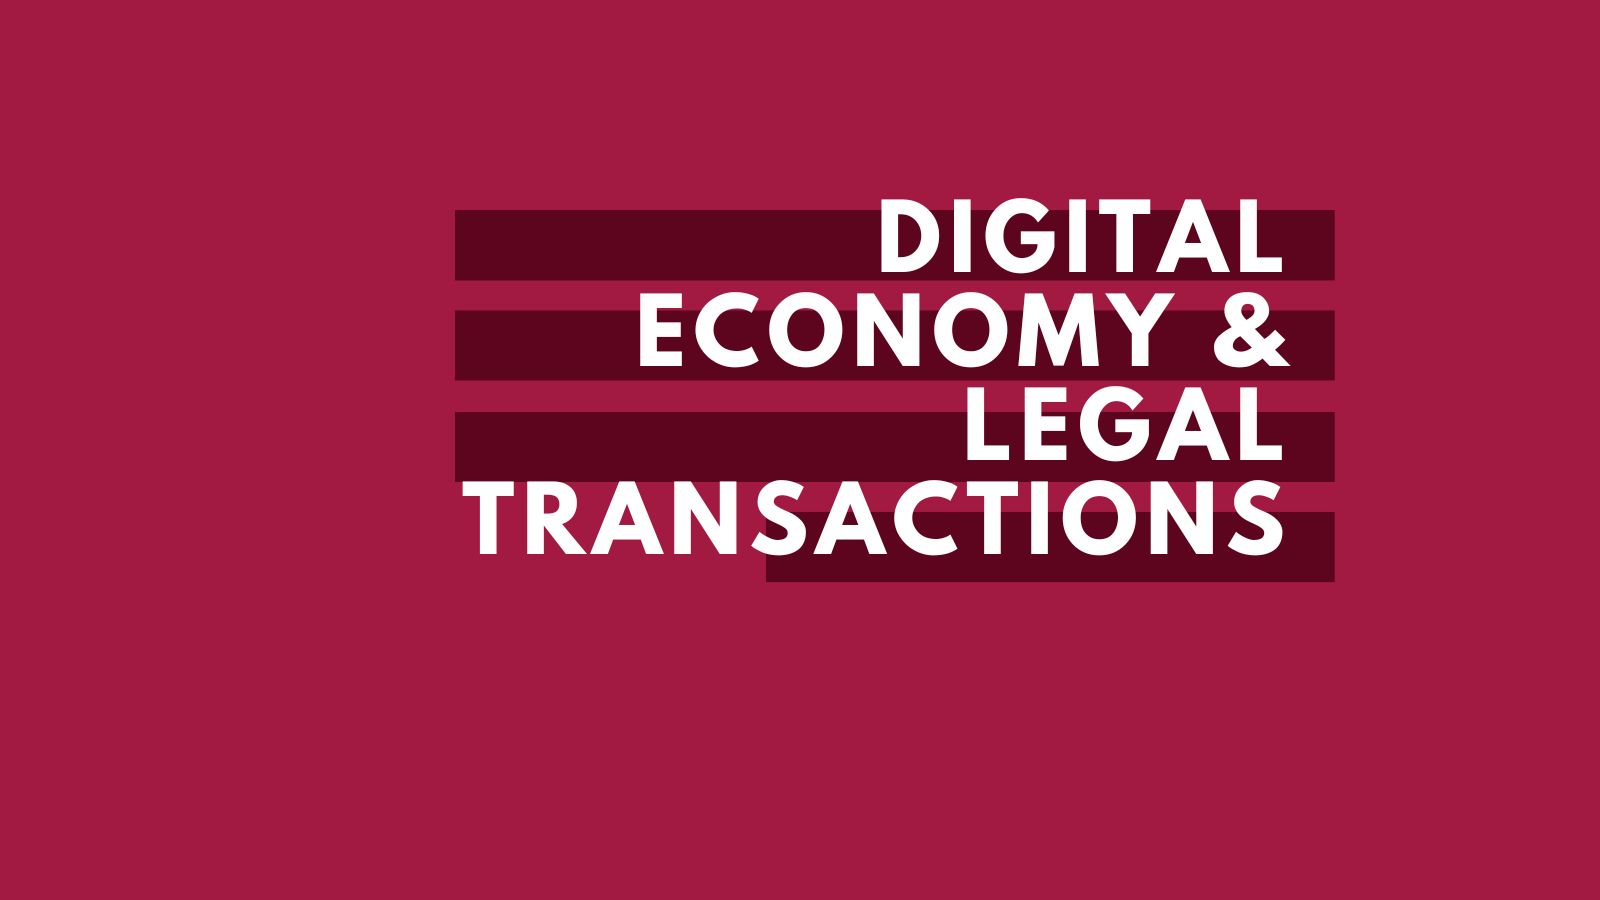 Digital Economy & Legal Transactions